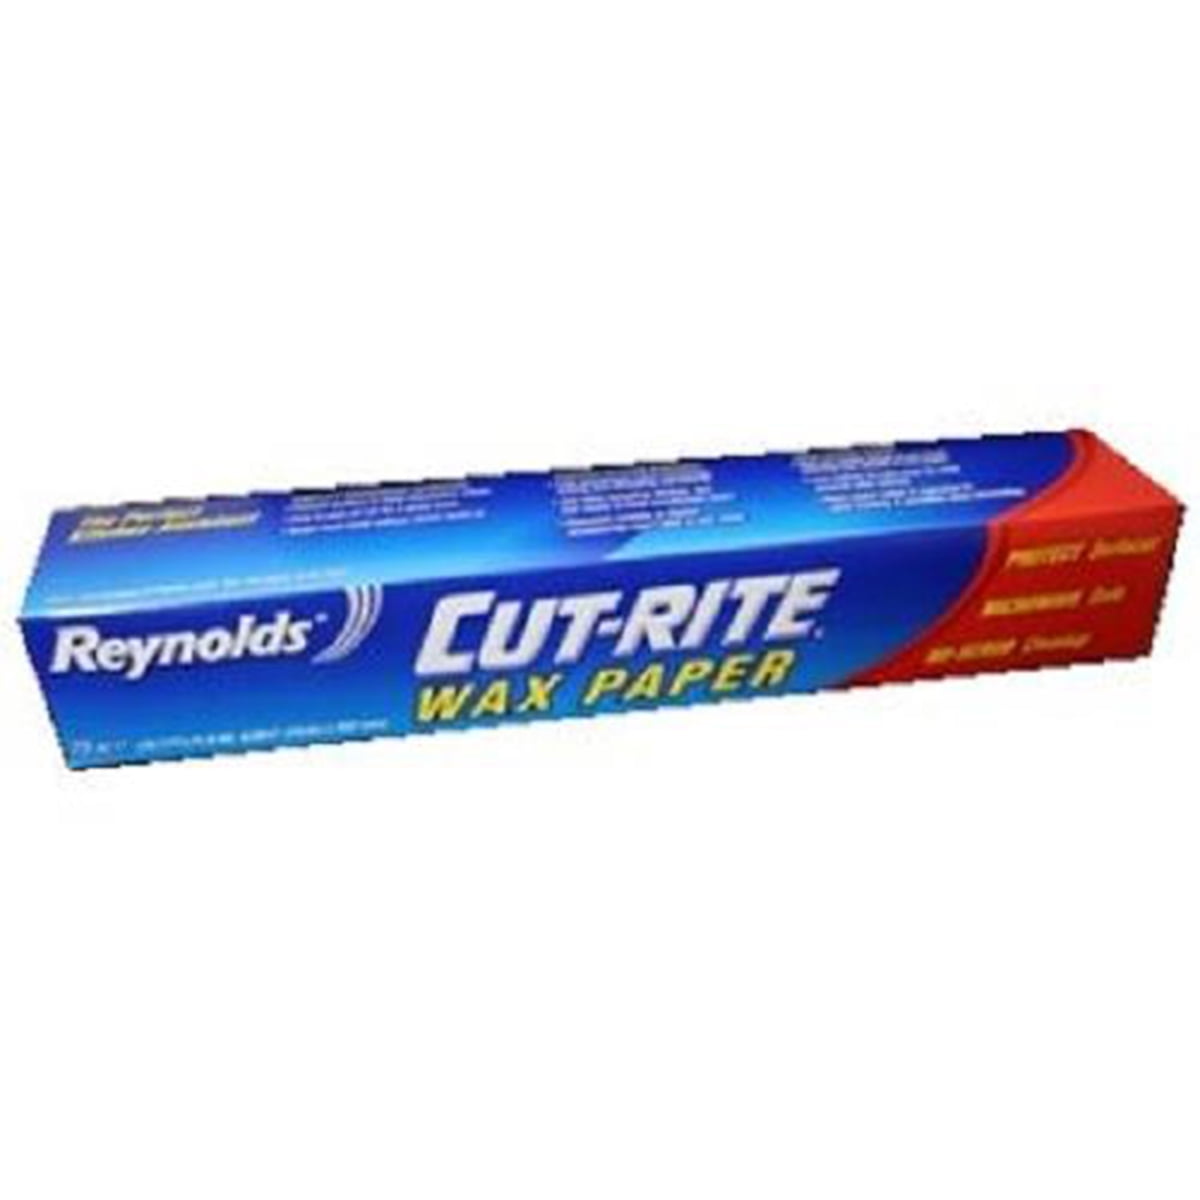 Reynolds Cut-Rite Wax Paper 60 Square Feet, 3 Pack – JK Trading